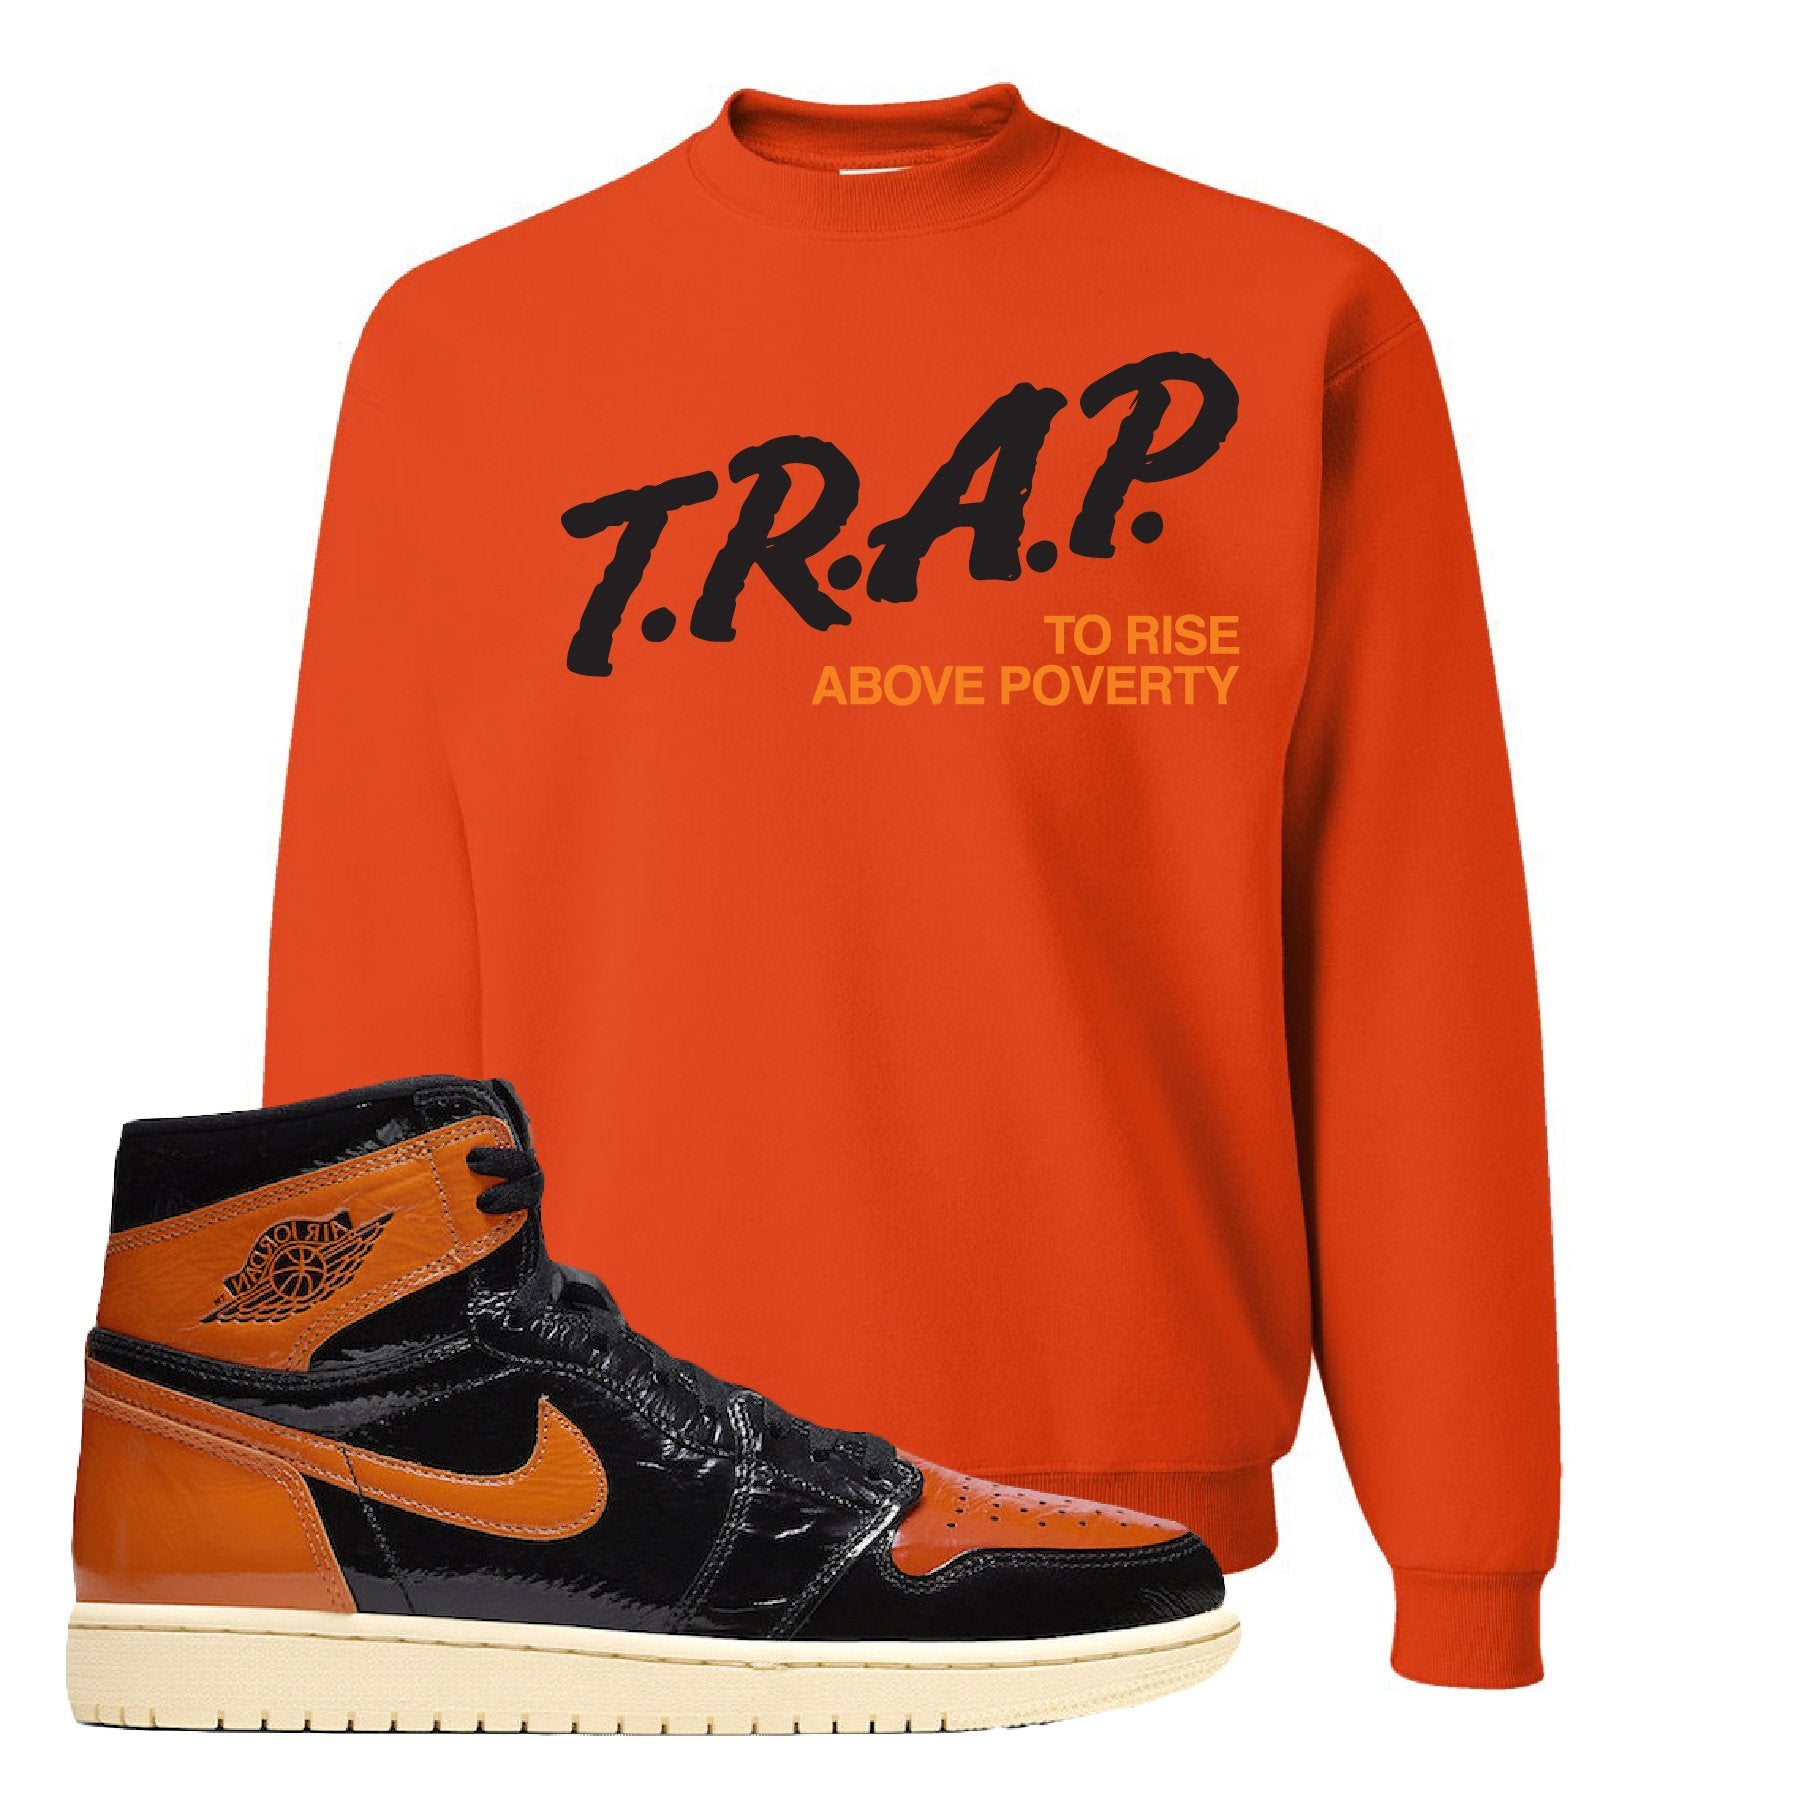 Jordan 1 Shattered Backboard Trap to Rise Above Poverty Burnt Orange Sneaker Hook Up Crewneck Sweatshirt